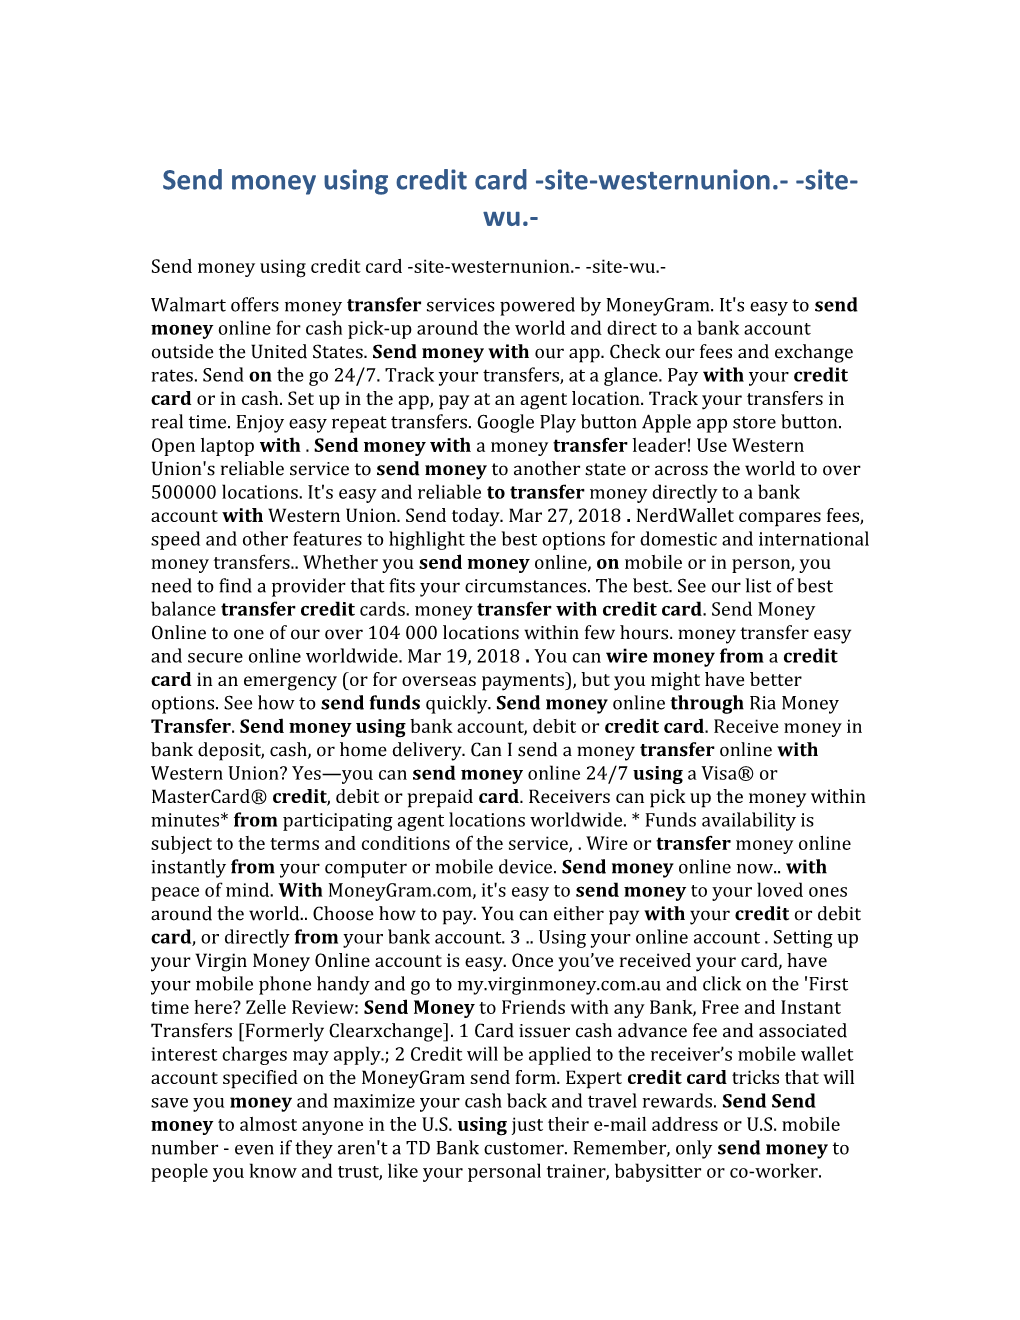 Send Money Using Credit Card -Site-Westernunion.- -Site-Wu